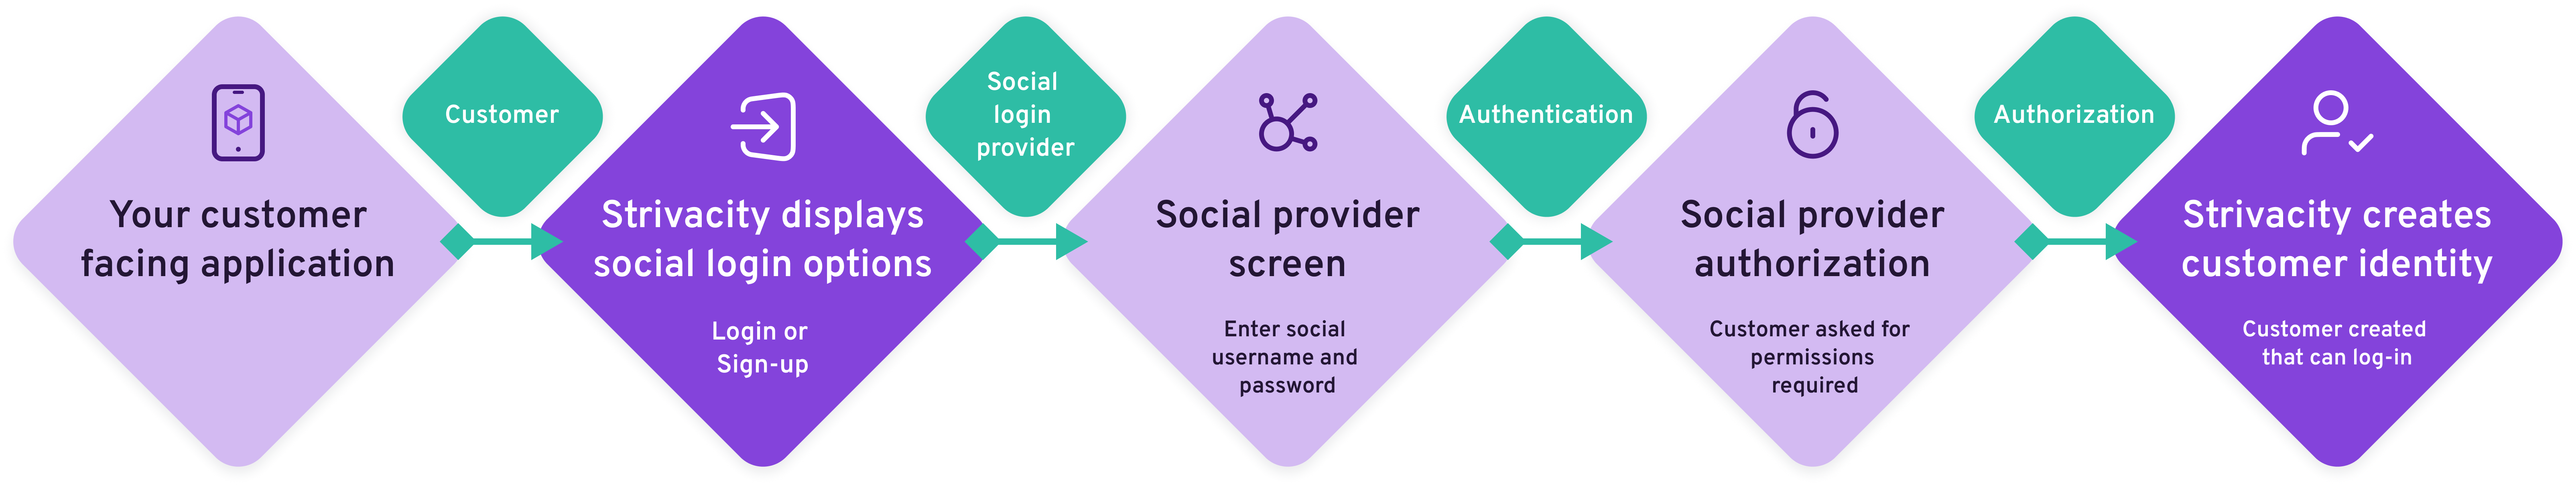 The social login process flow